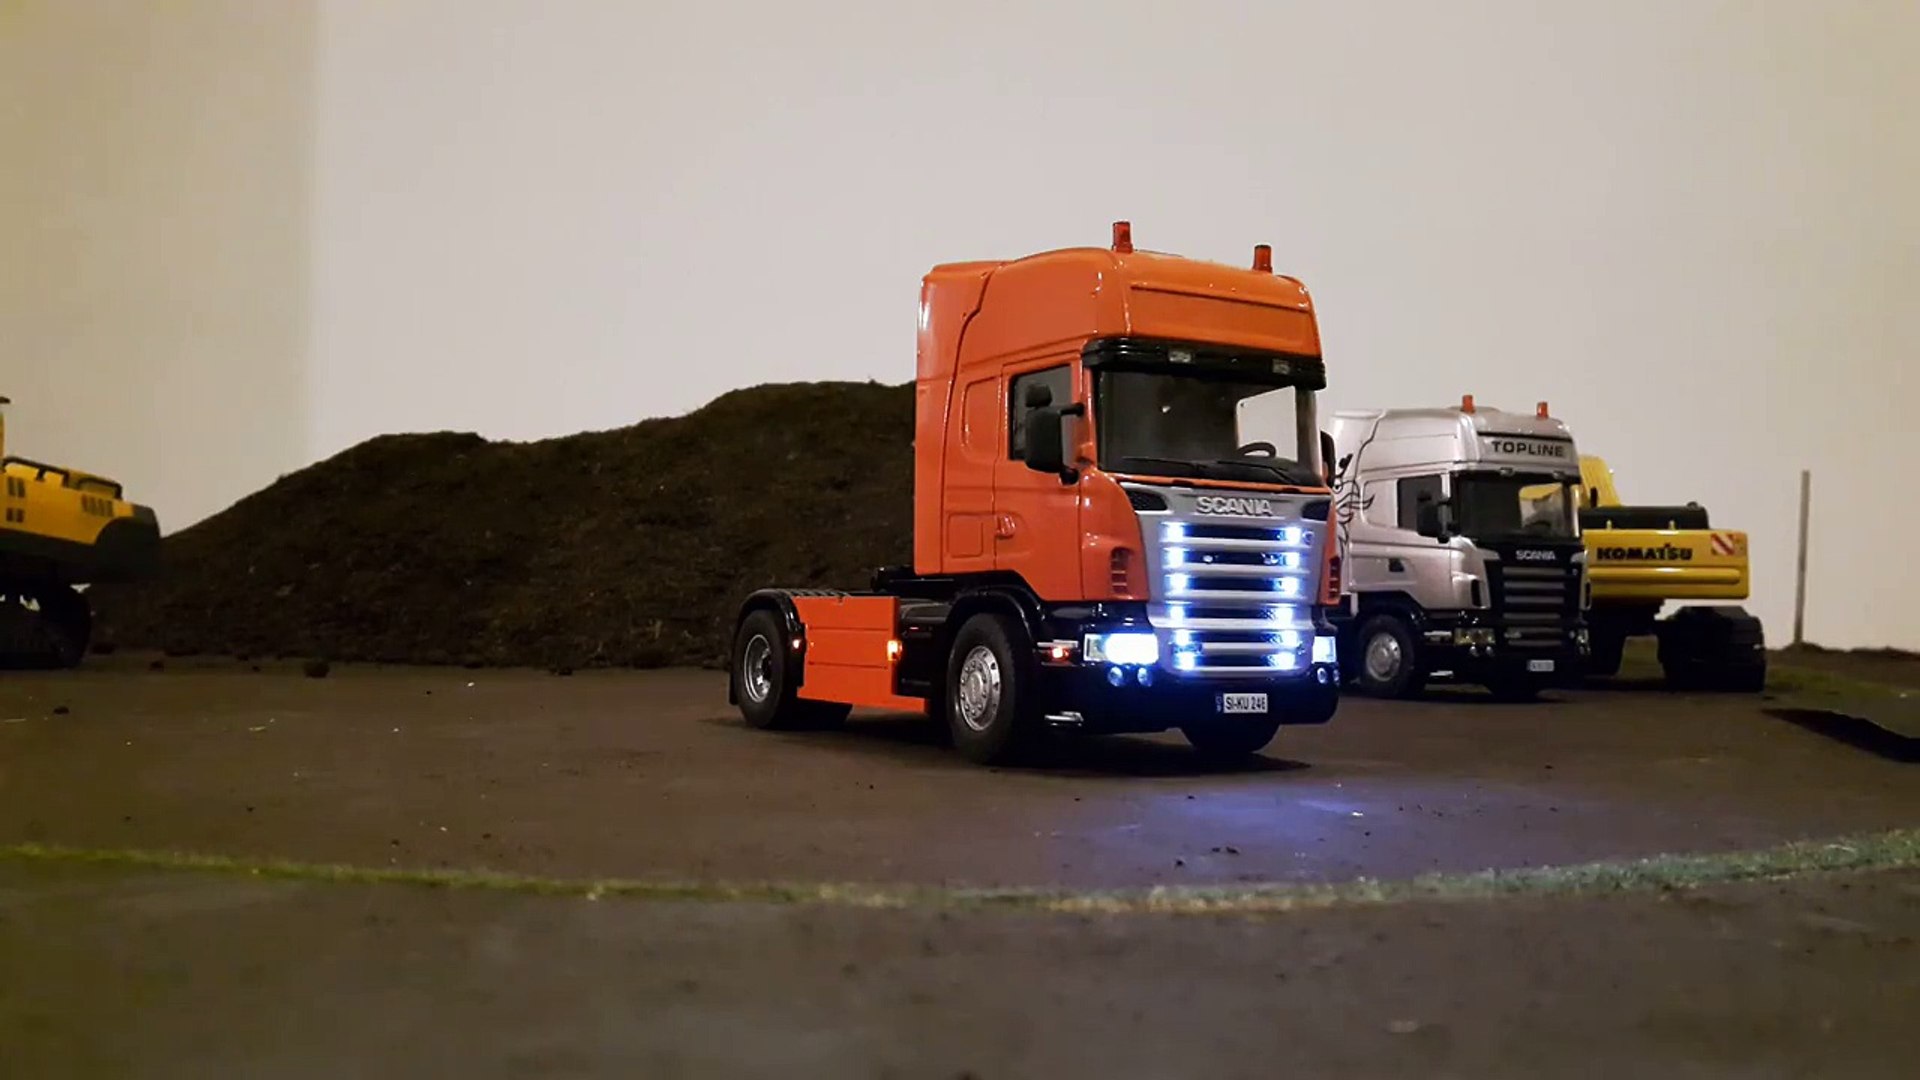 Siku Control Umbau Scania, Lichtumbau, RC, Truck, 1:32 - video Dailymotion